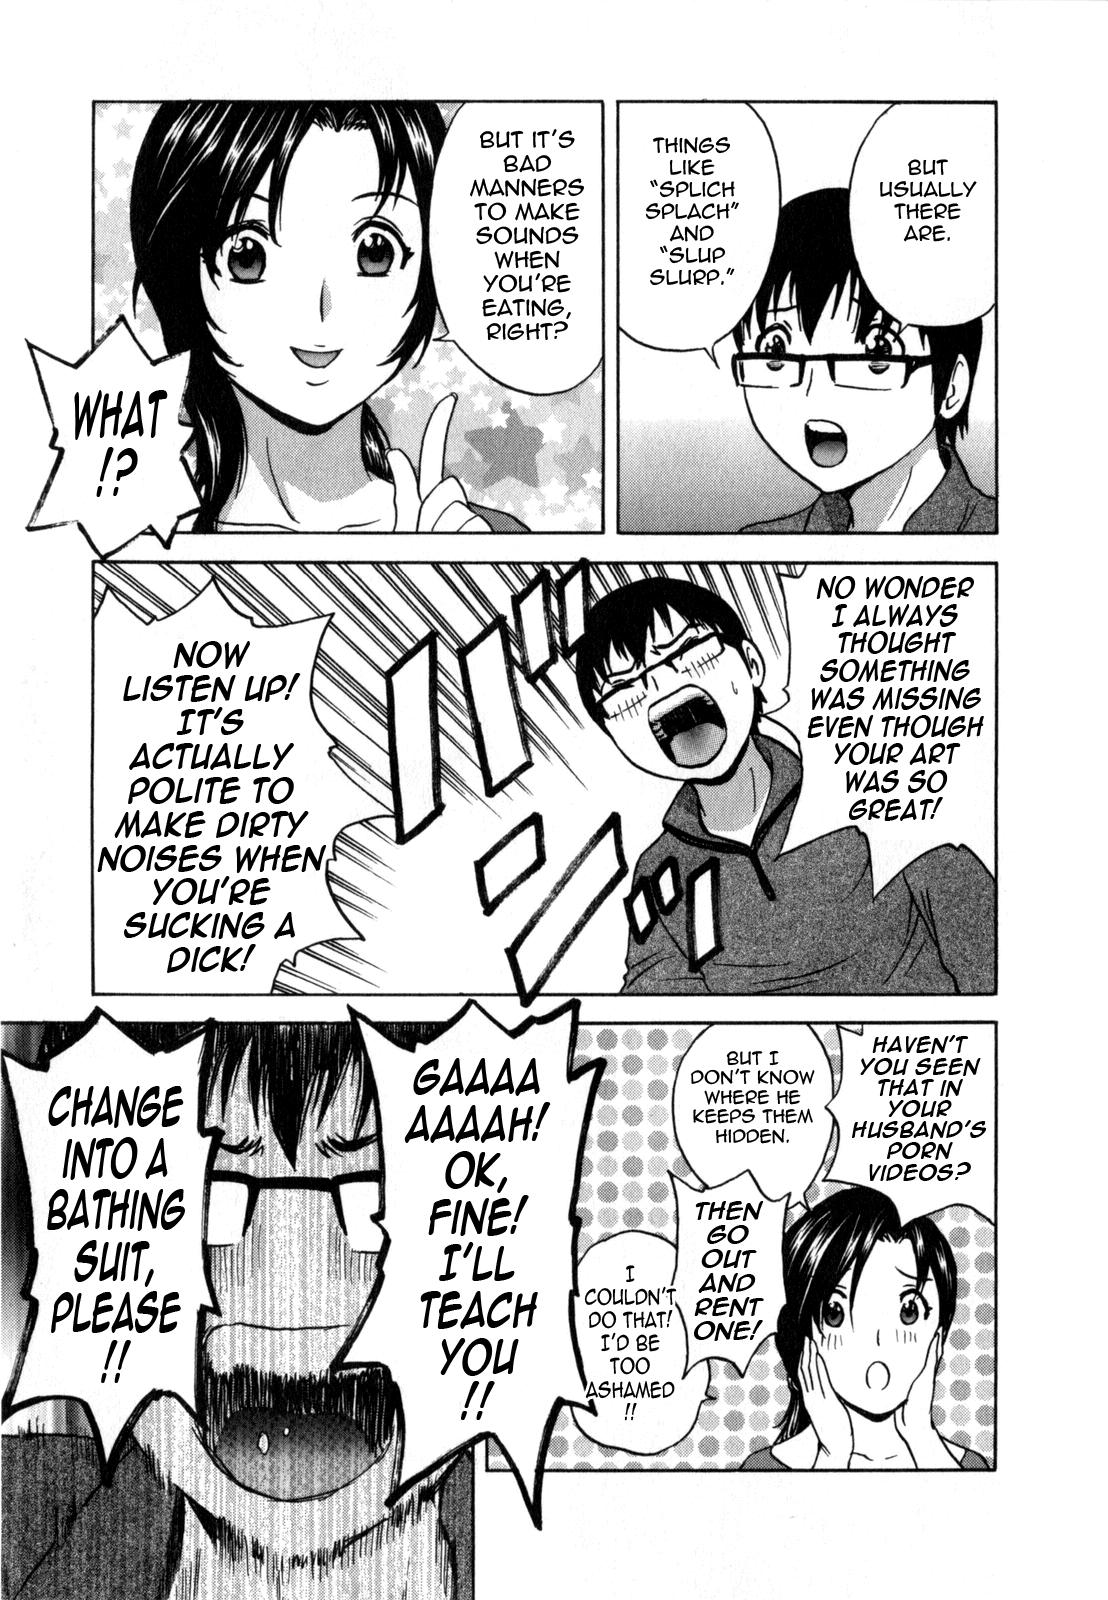 [Hidemaru] Life with Married Women Just Like a Manga 1 - Ch. 1-7 [English] {Tadanohito} 15